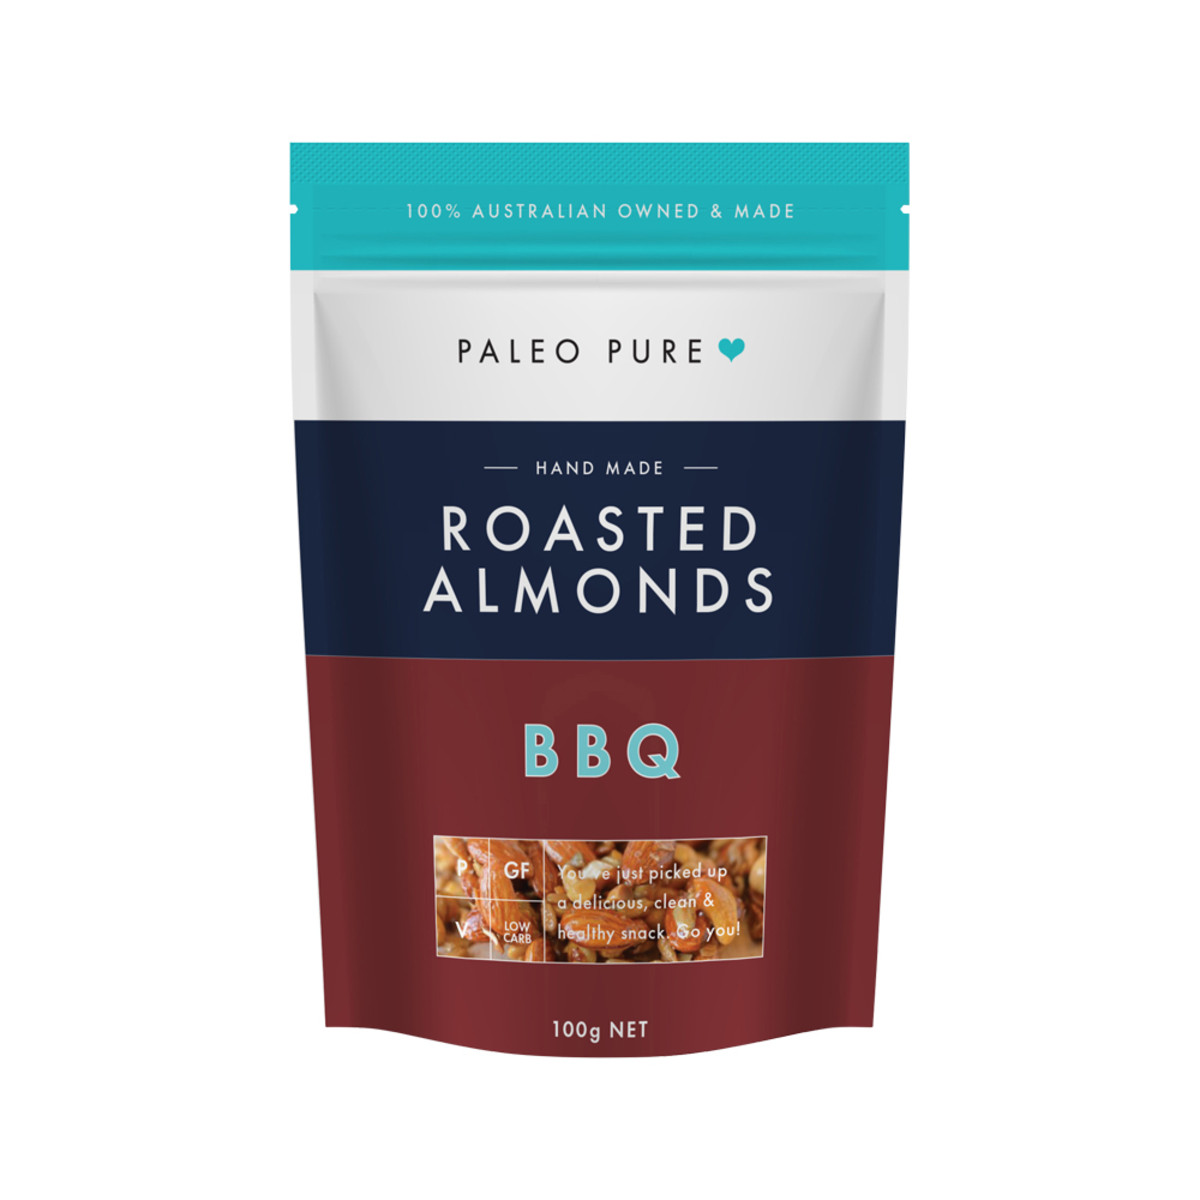 PALEO PURE - Roasted Almonds BBQ